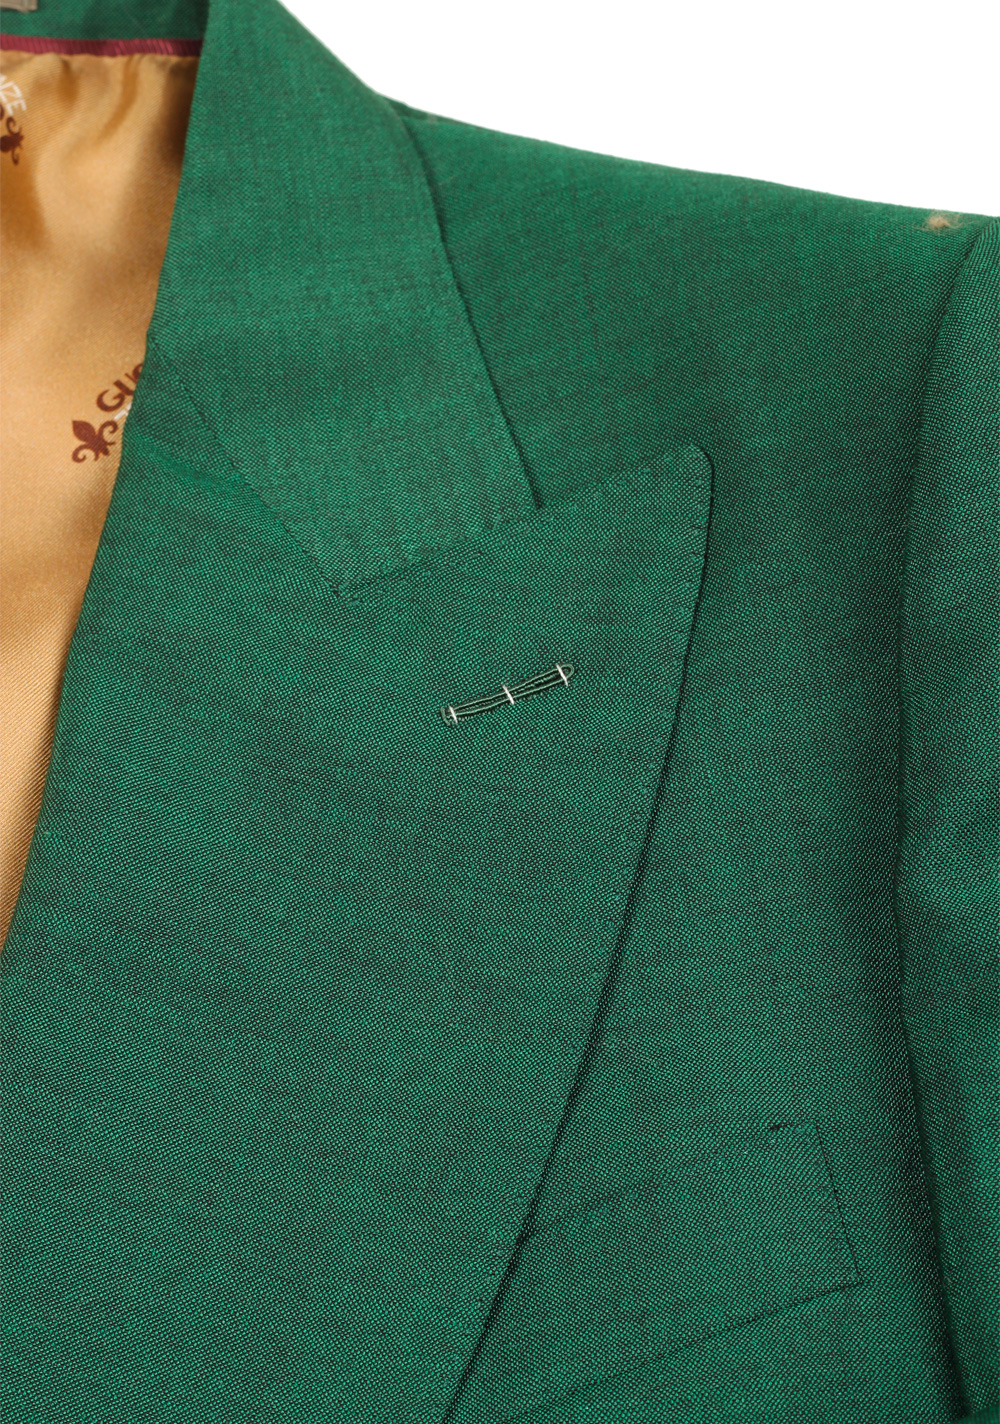 Gucci Green Blazer Sport Coat | Costume Limité